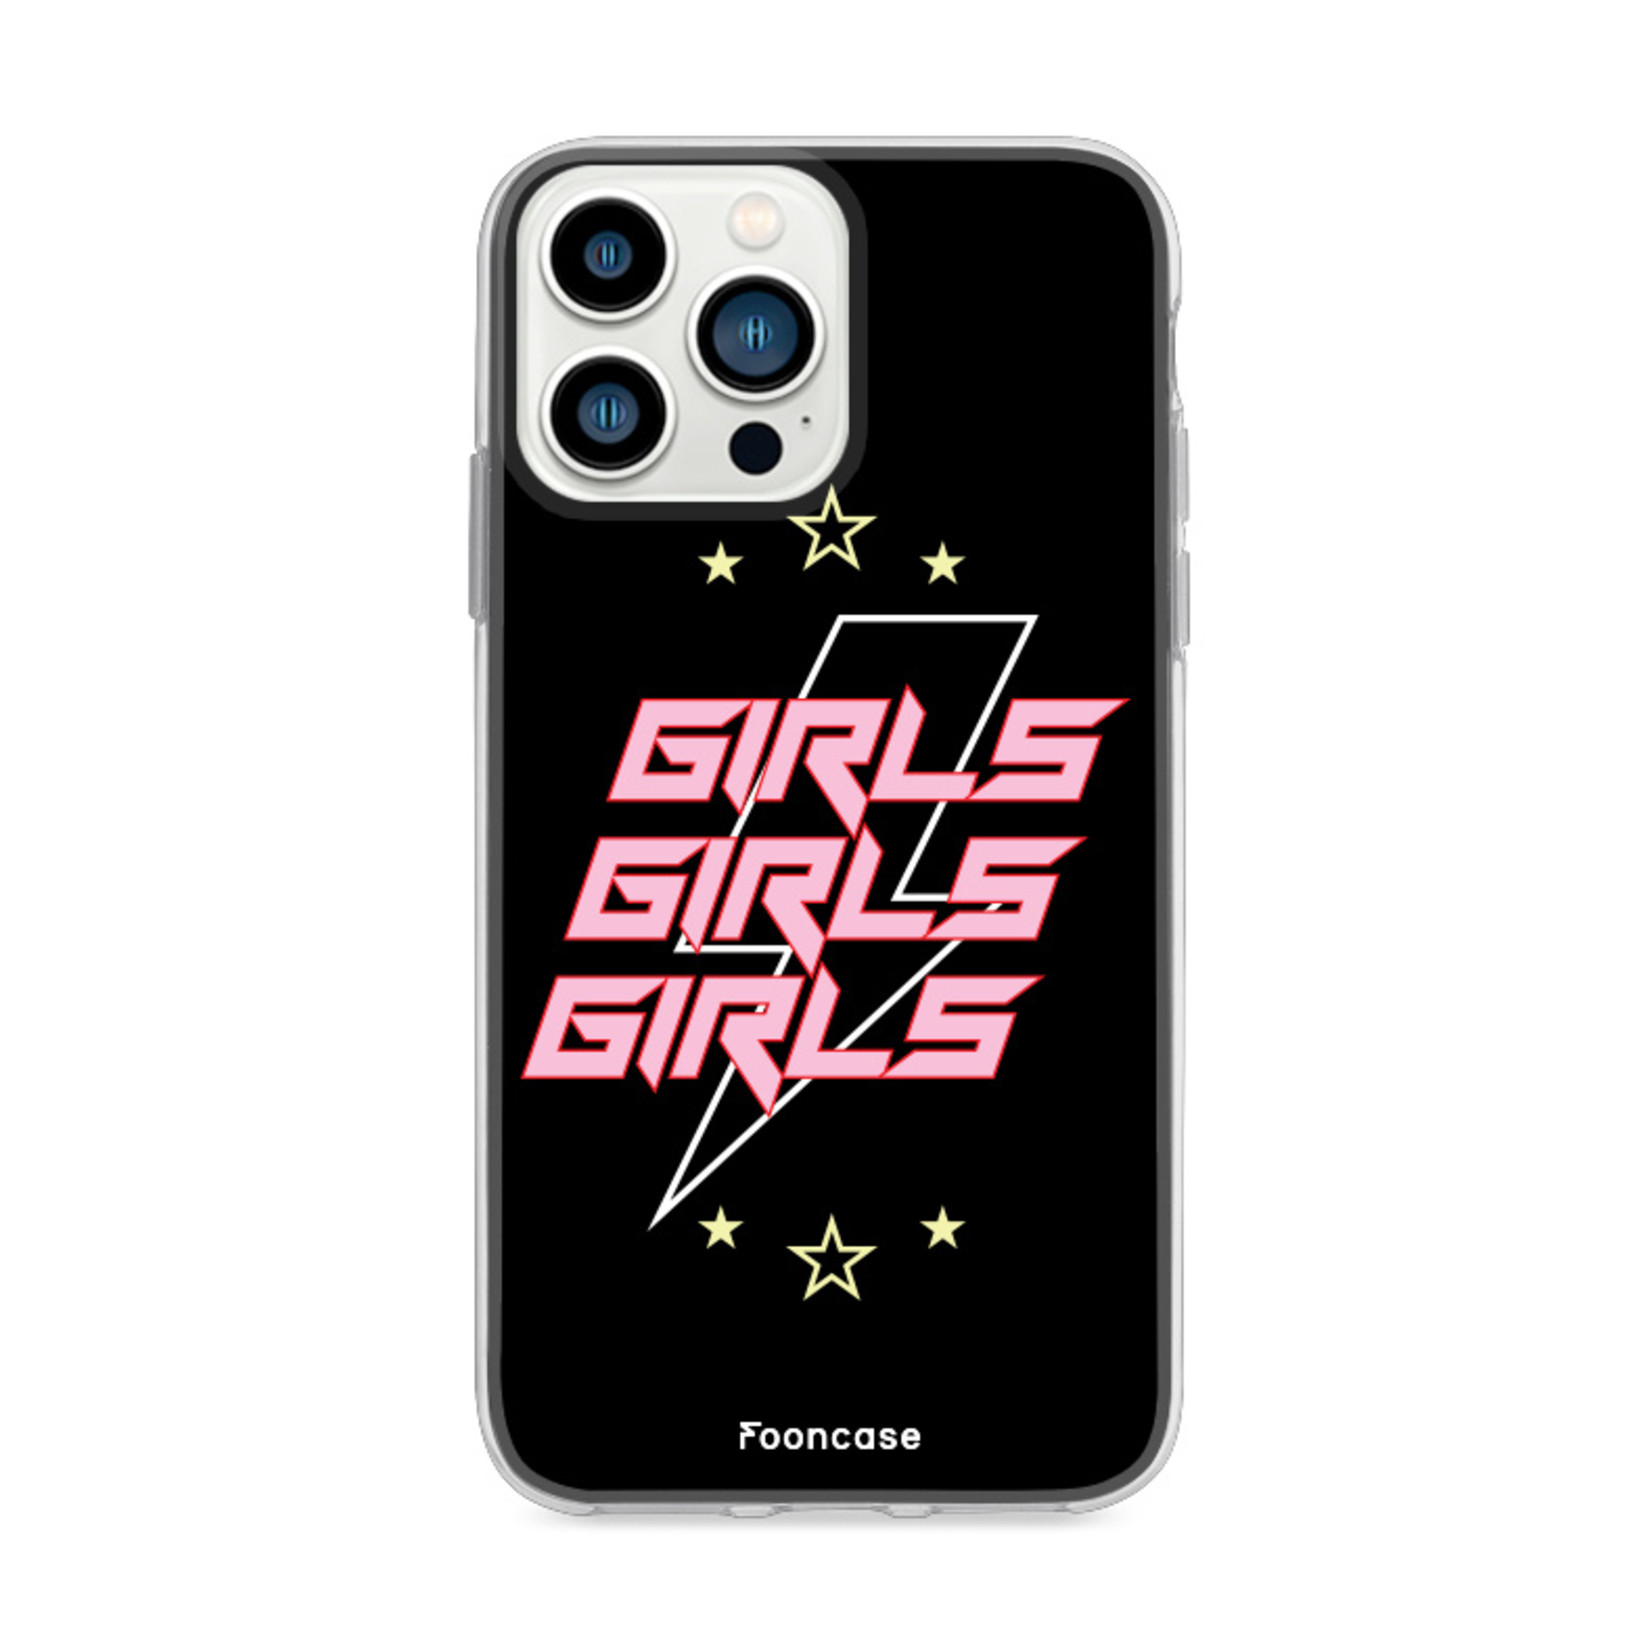 iPhone 13 Pro Max hoesje TPU Soft Case - Back Cover - Rebell Girls (sterretjes bliksem girls)